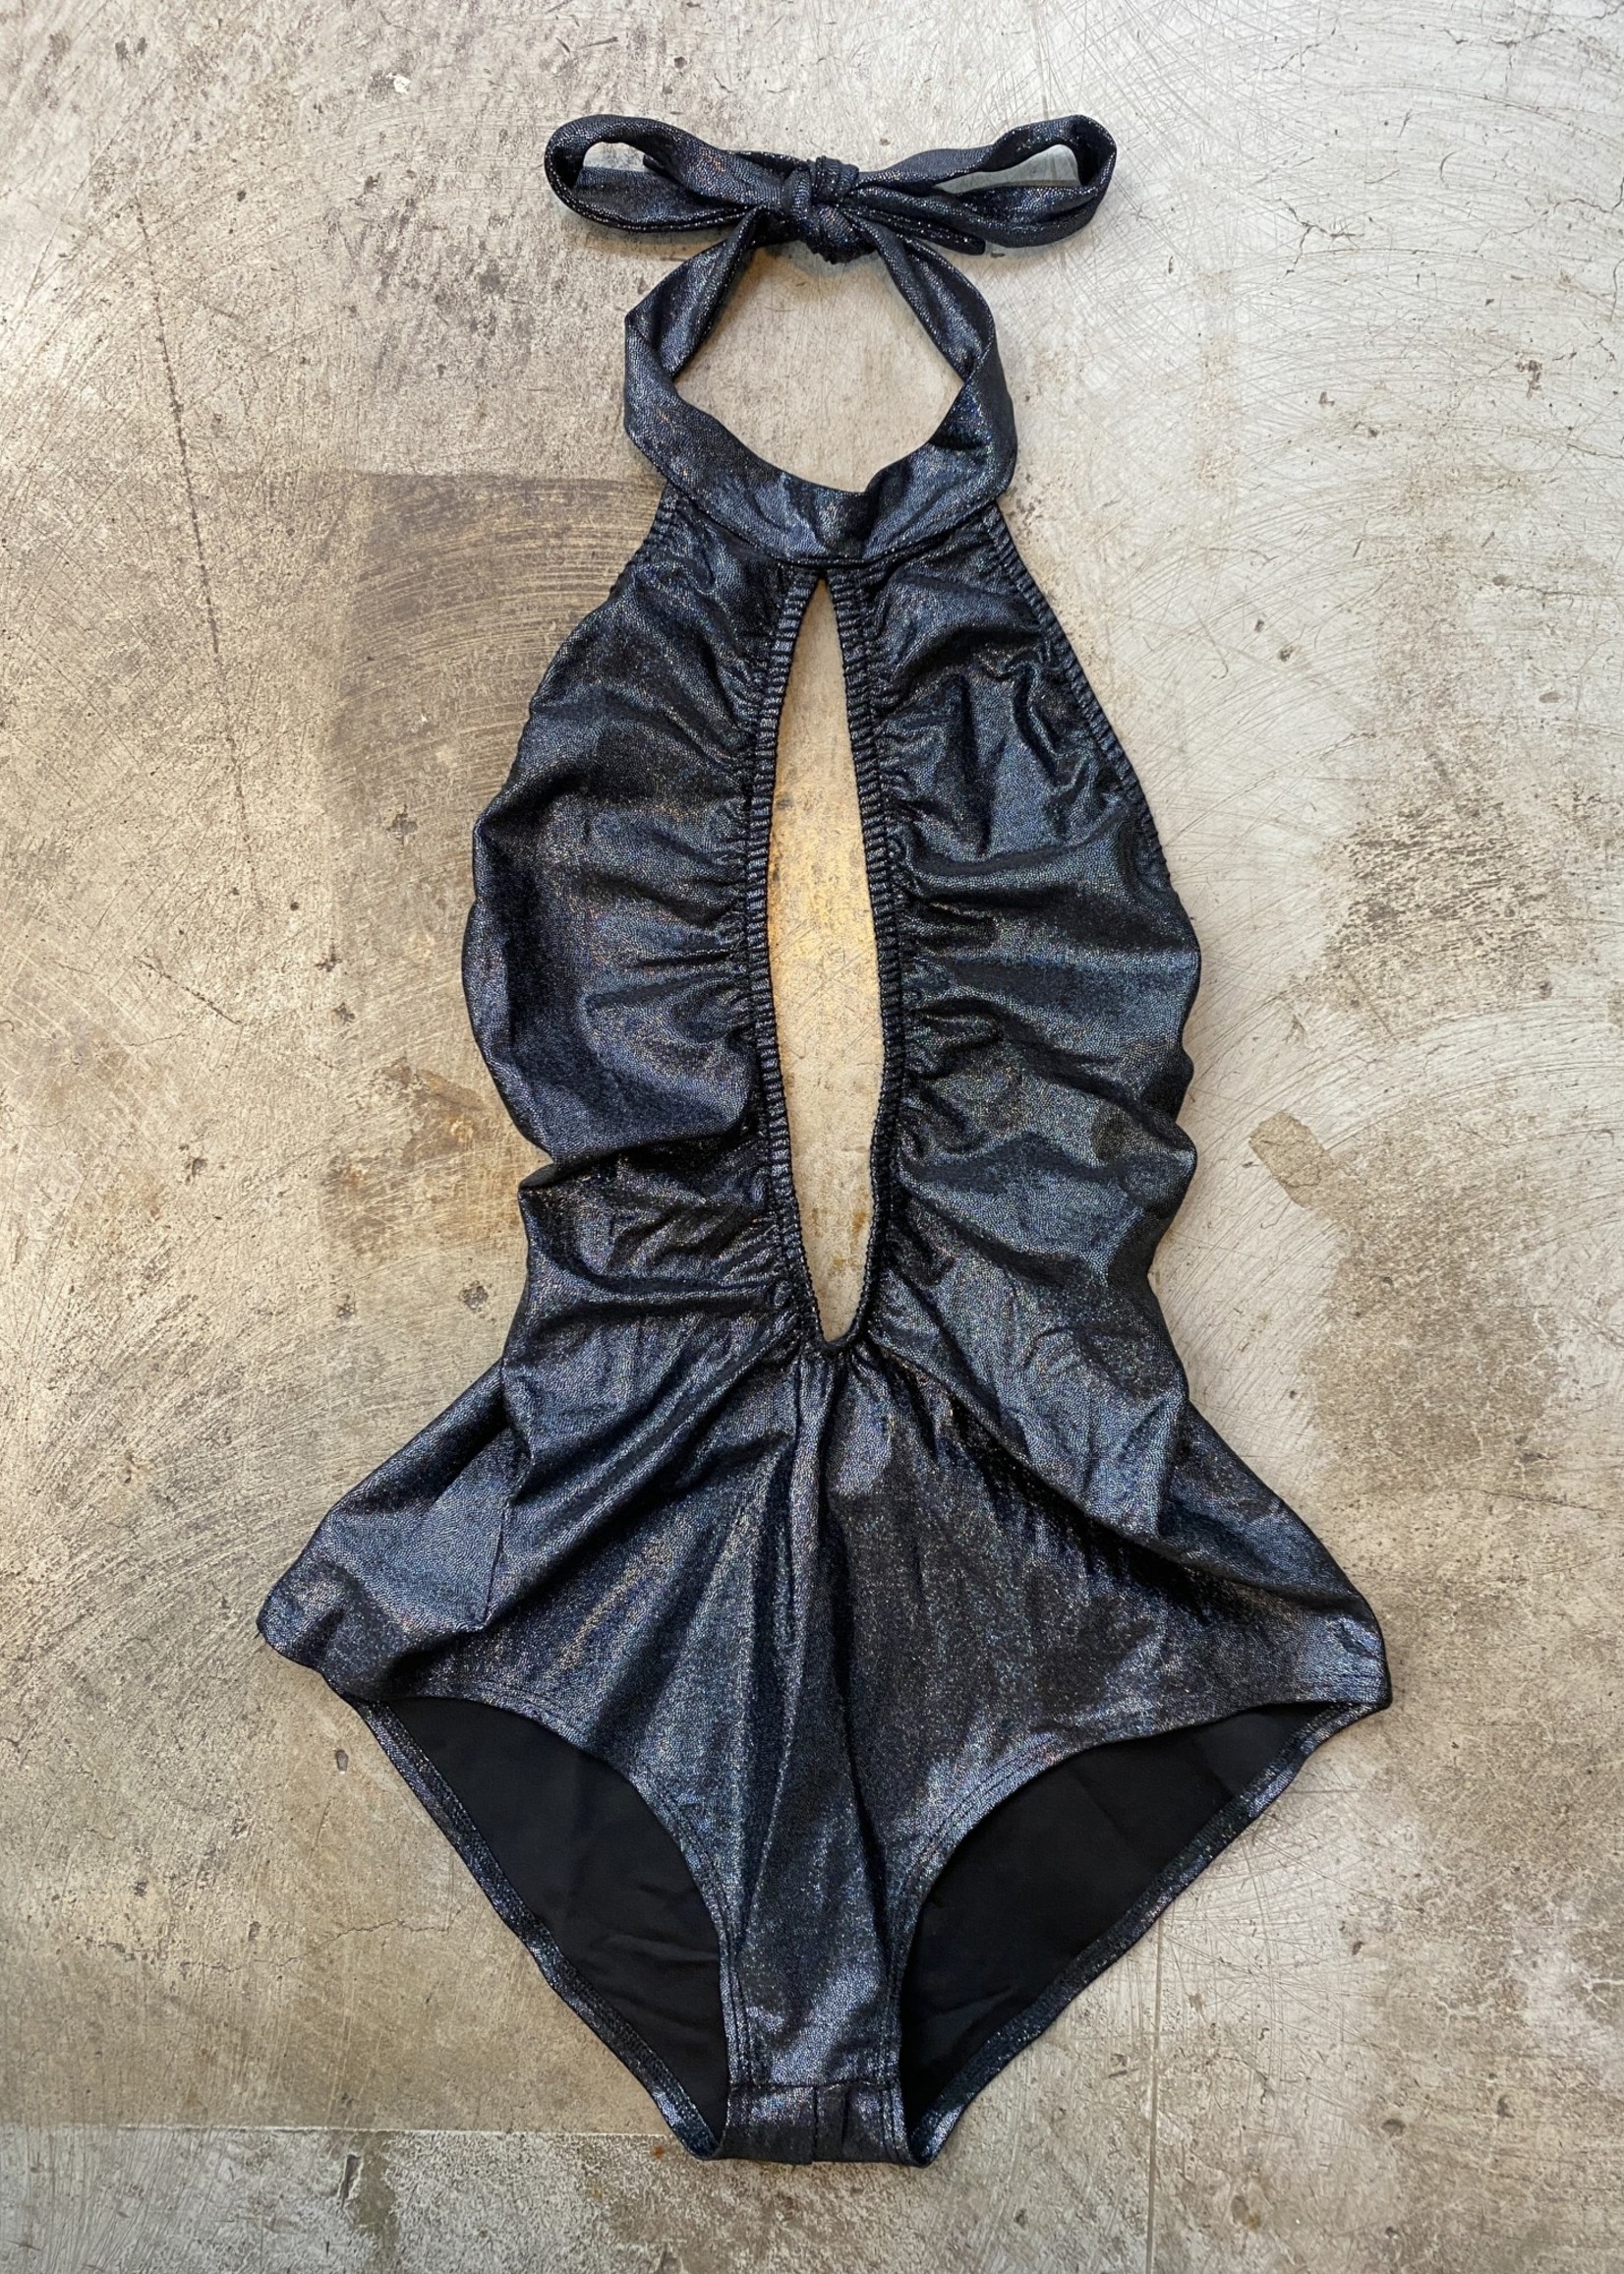 J Valentine Black Shimmer Bodysuit S